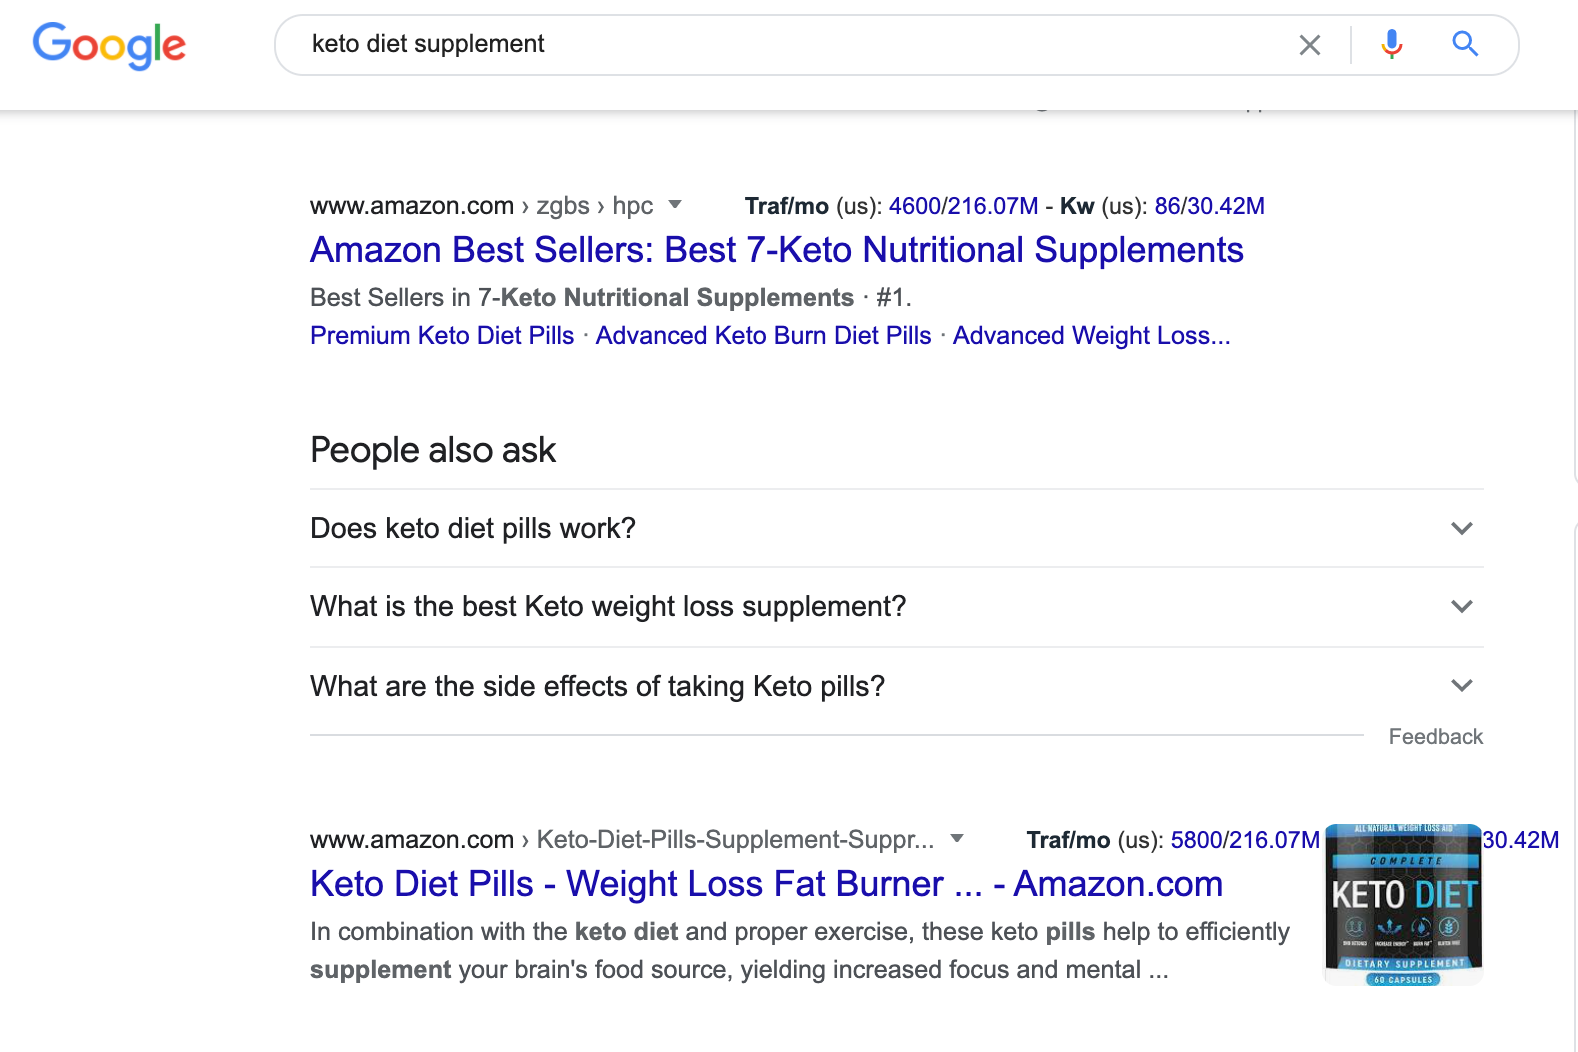 keto diet supplement - Google Search